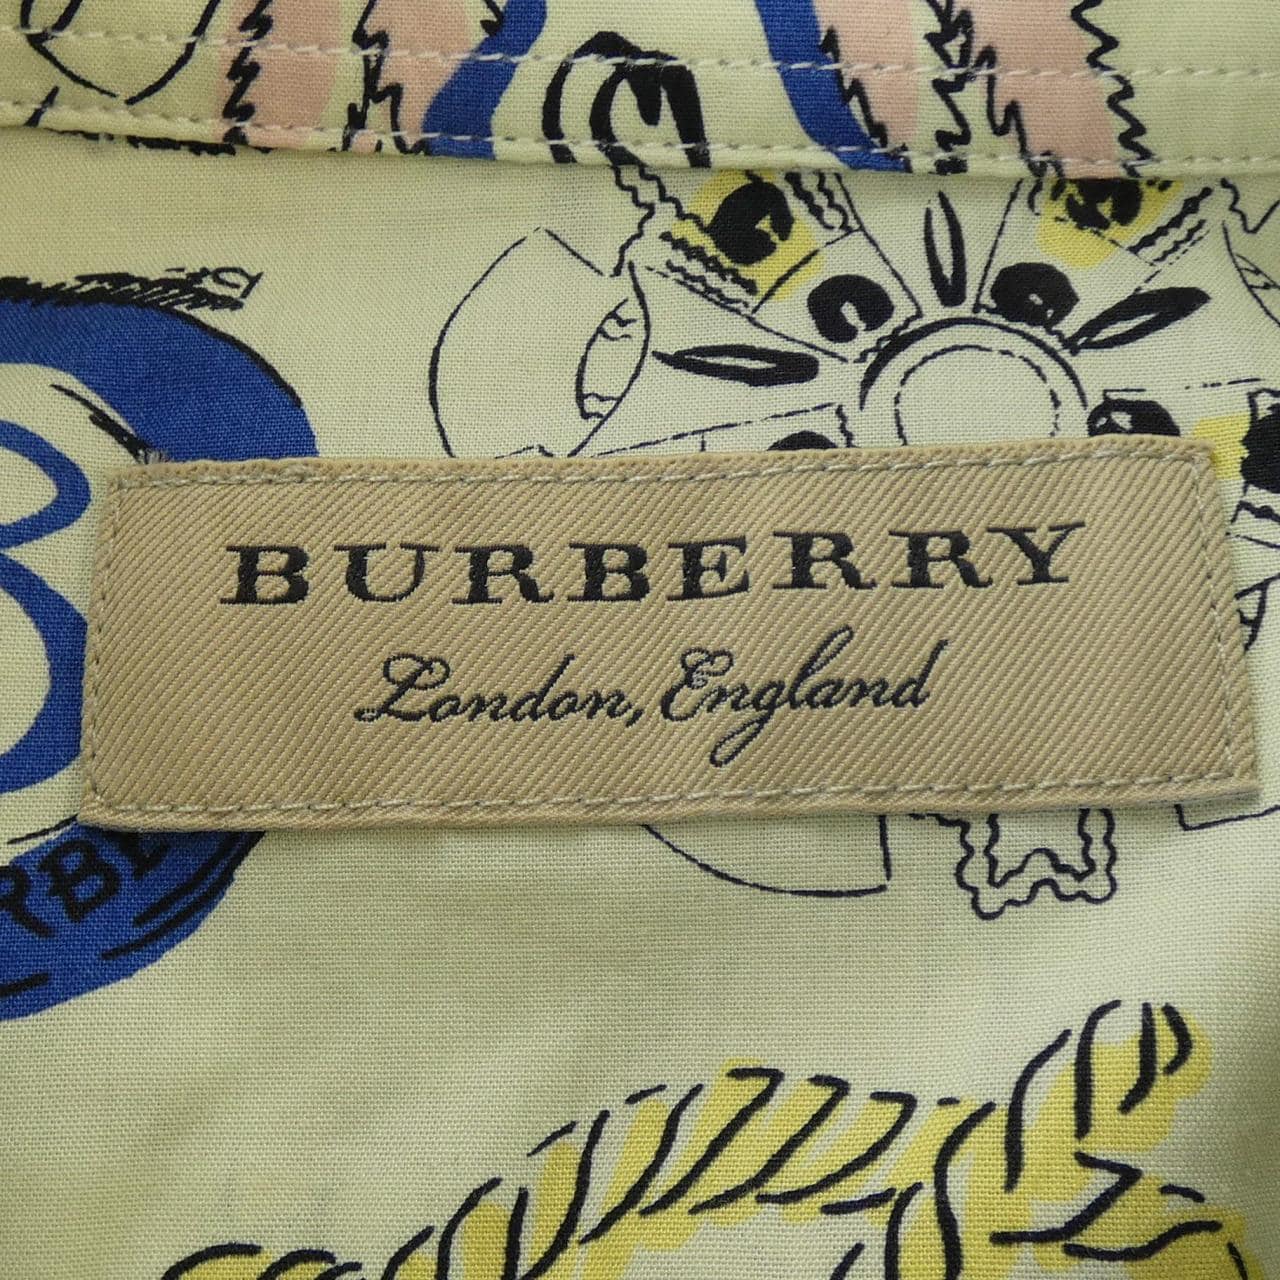 BURBERRY衬衫